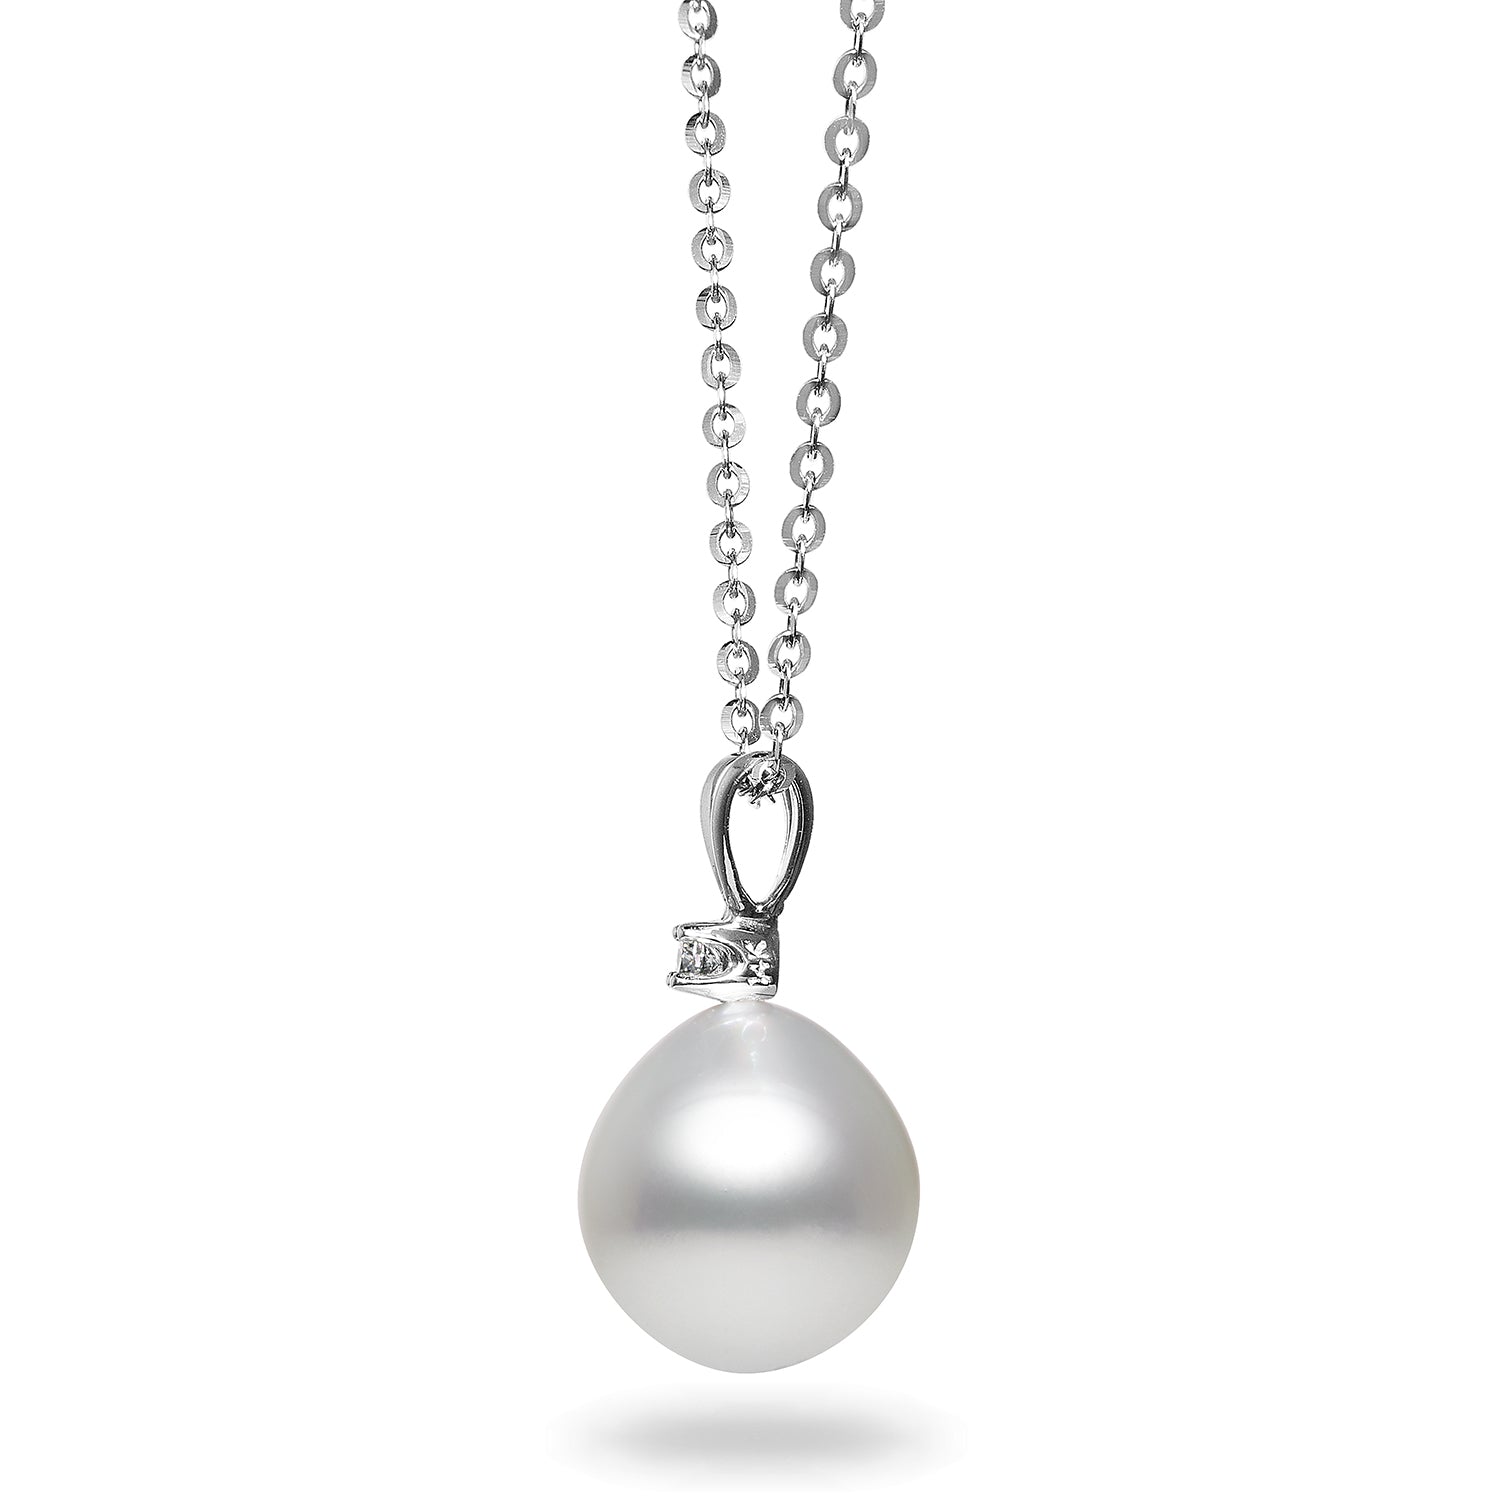 10-11mm White South Sea Pearl and Diamond Pendant